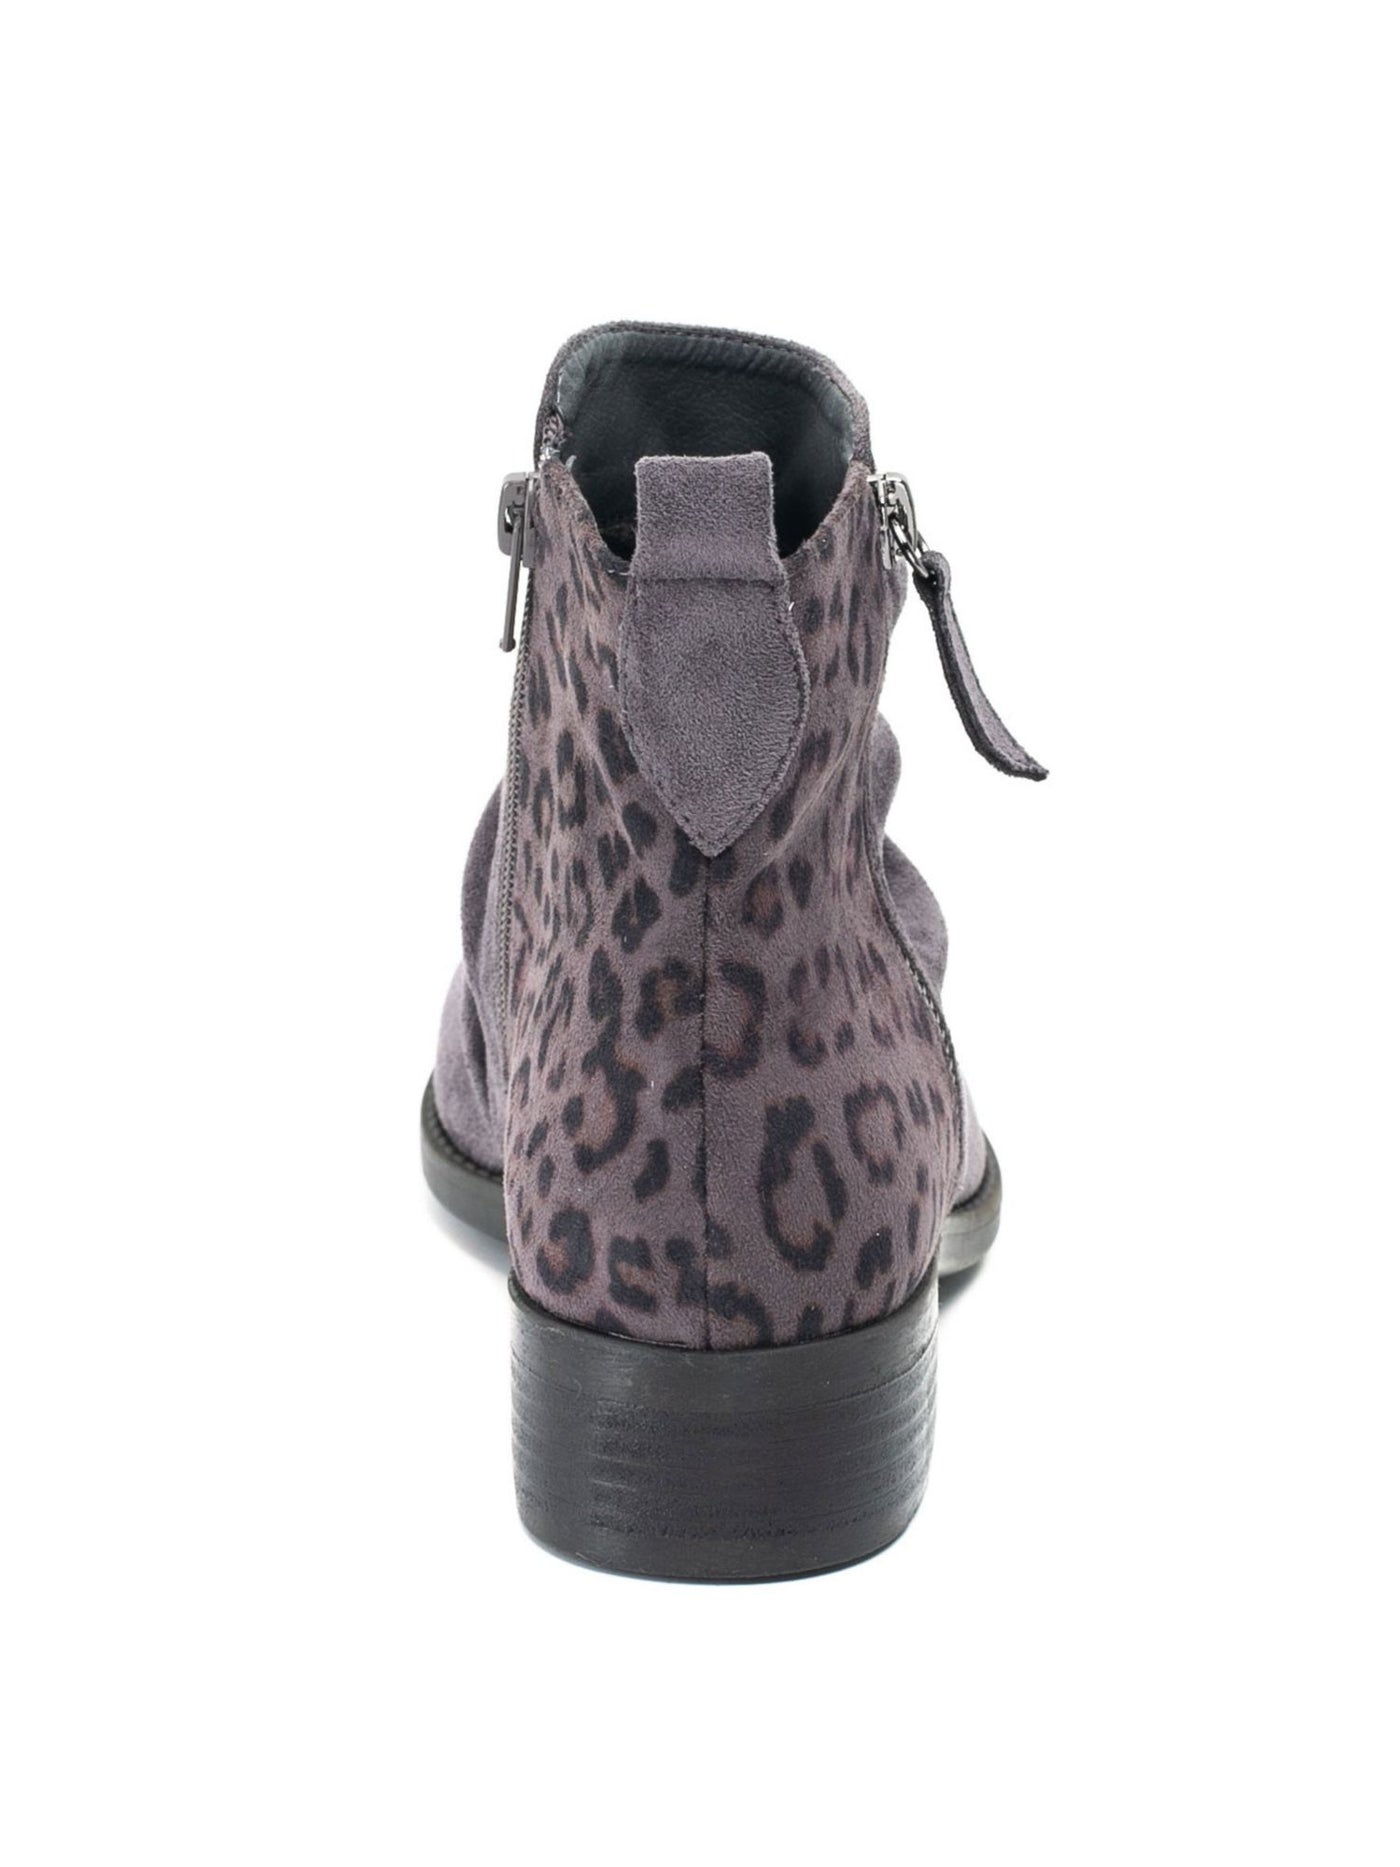 G.C. SHOES Womens Gray Leopard Print Pull Tab Comfort Zipper Accent Ruched Nori Round Toe Block Heel Zip-Up Booties 8